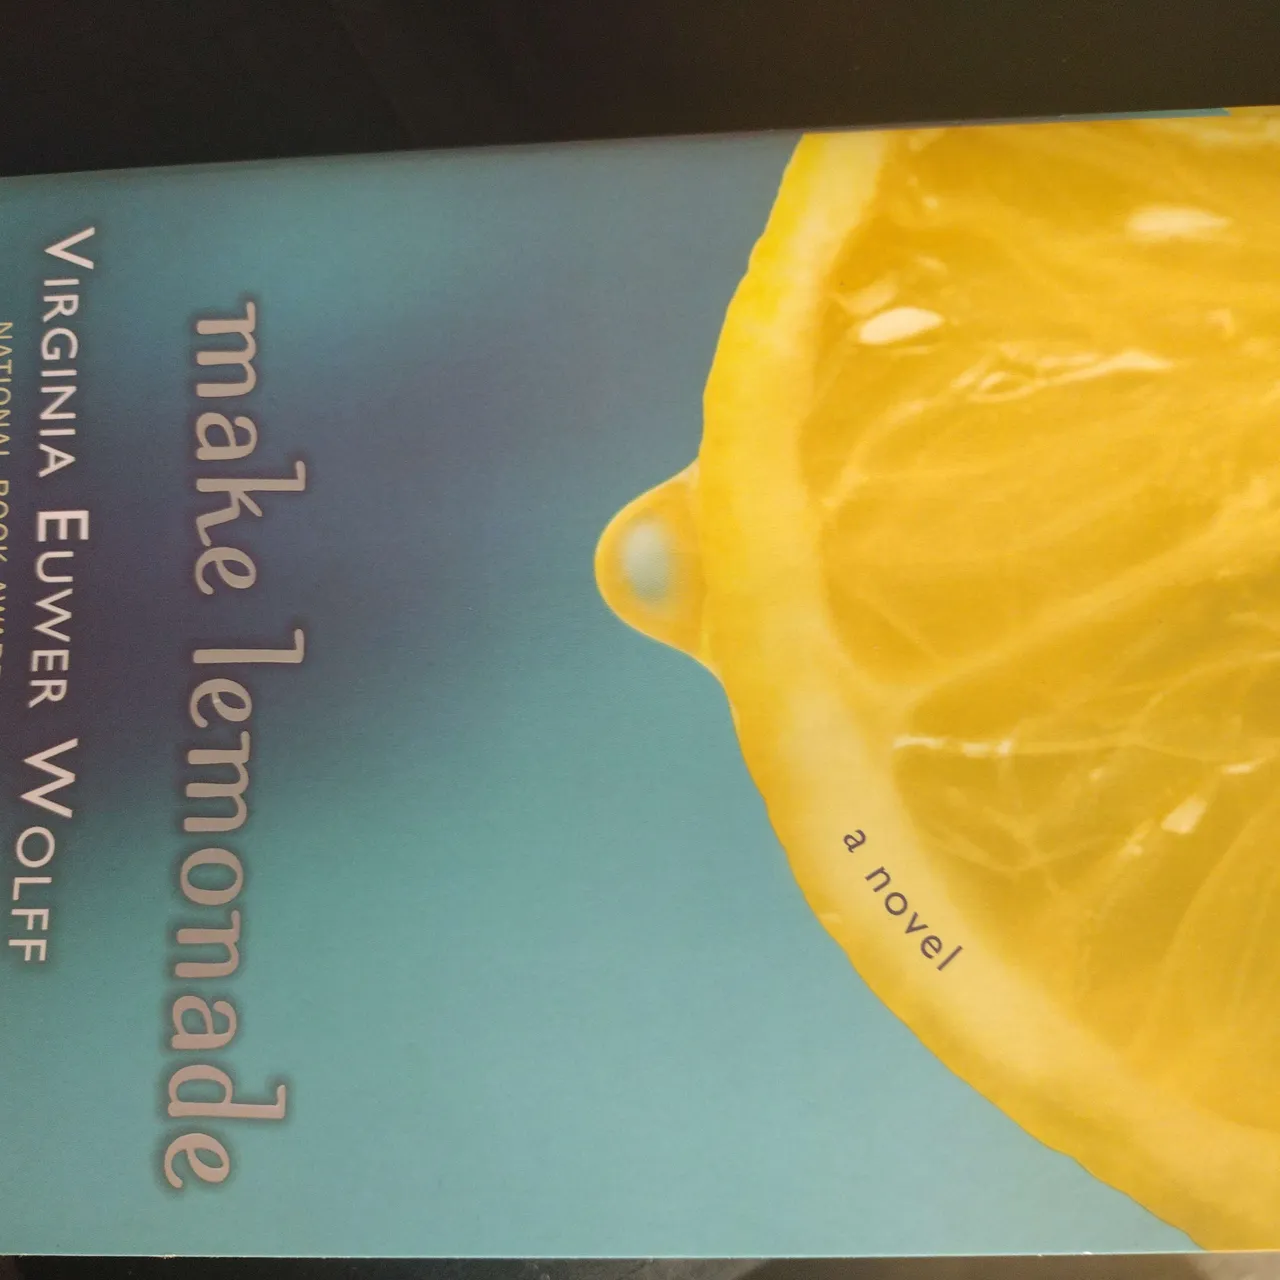 Trading Make Lemonade by Virginia Euwer Wolff photo 1